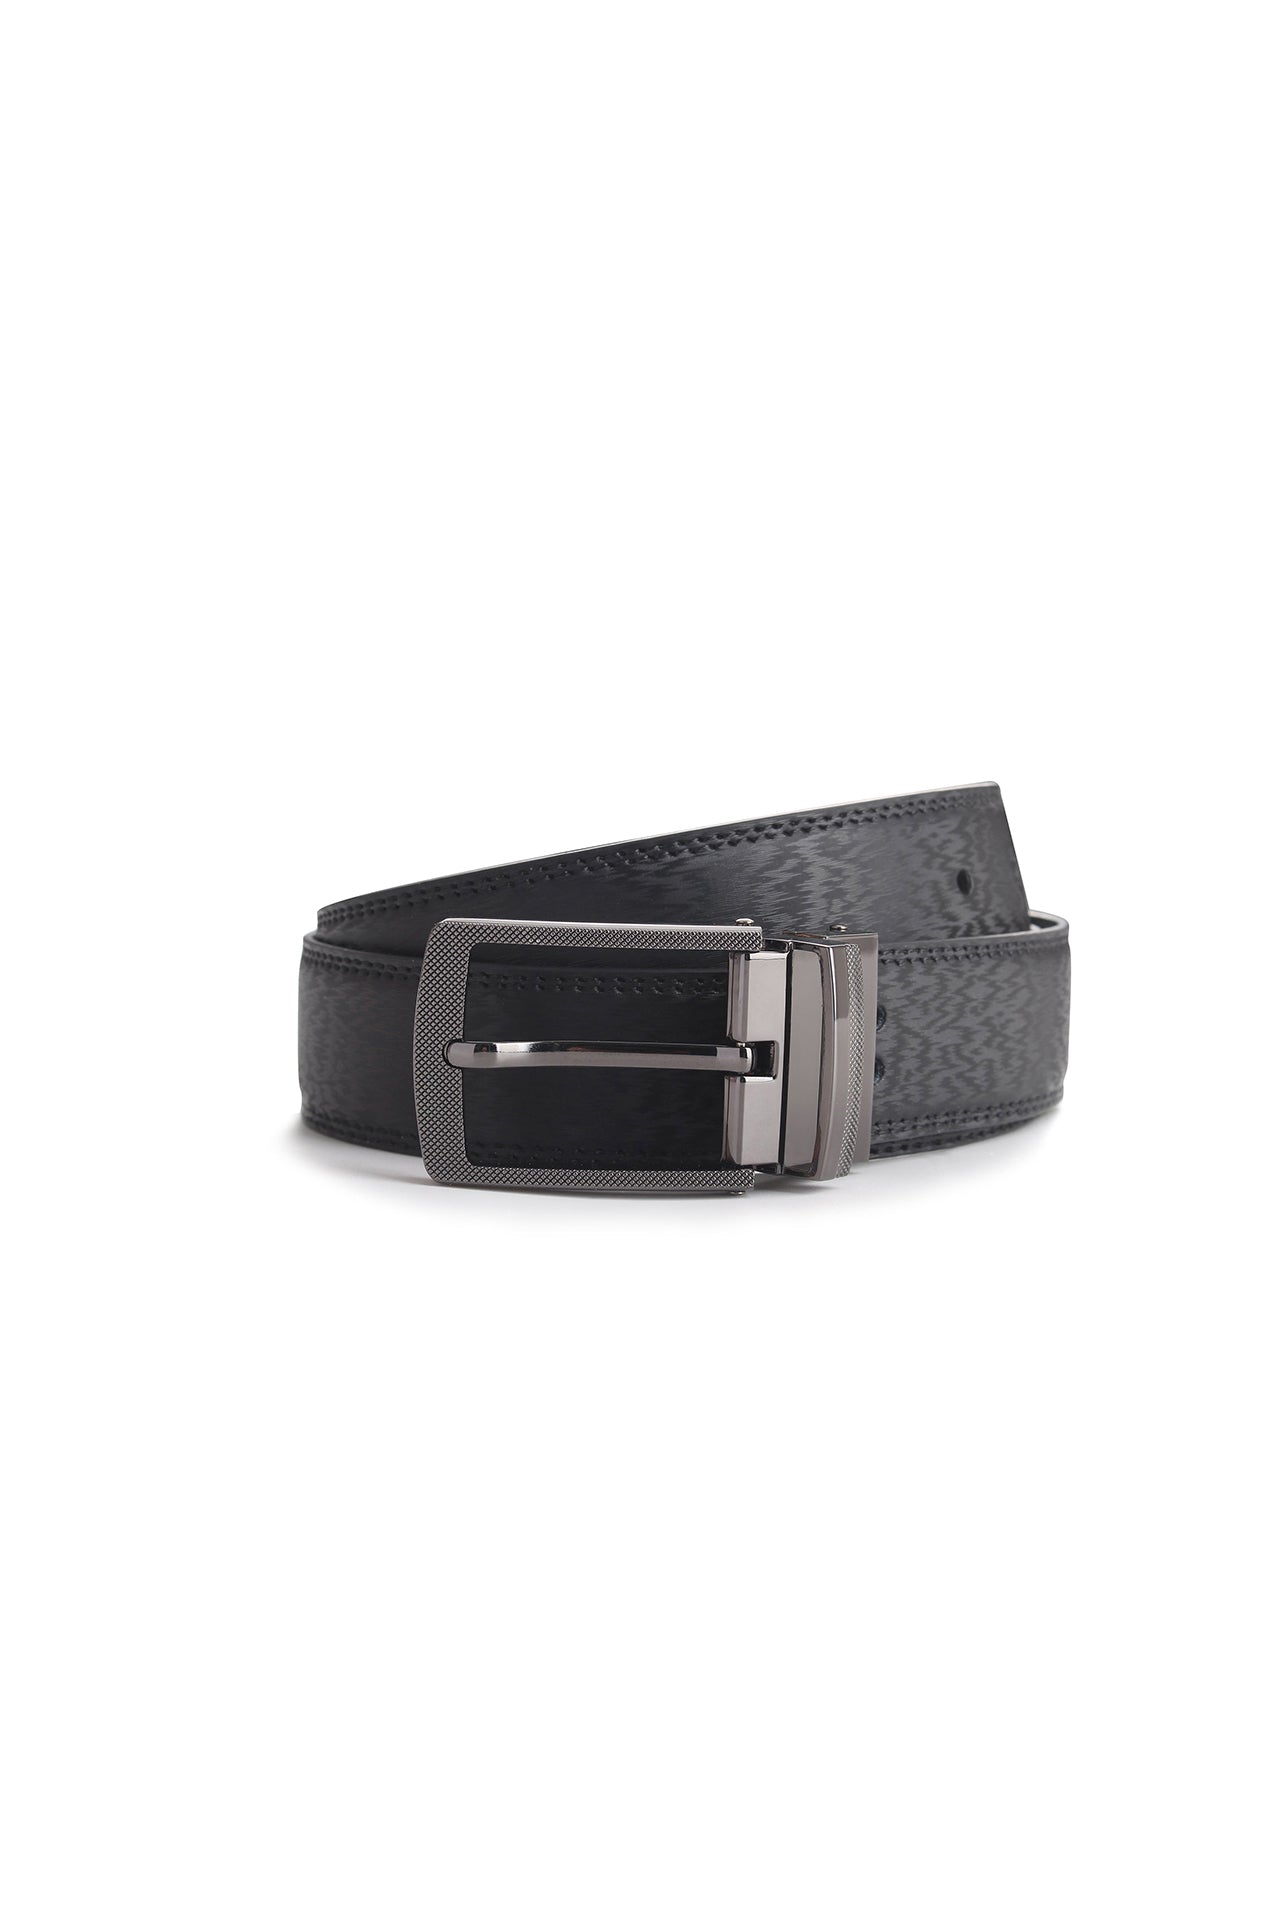 35mm Black Genuine Split Leather Reversible Belt-35mm [Without Buckle]